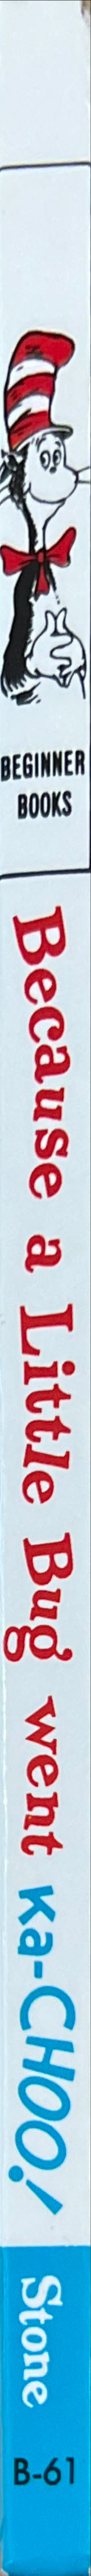 Because a Little Bug Went Ka-Choo! - Dr. Seuss (Random House - Hardcover) book collectible [Barcode 9780394831305] - Main Image 3